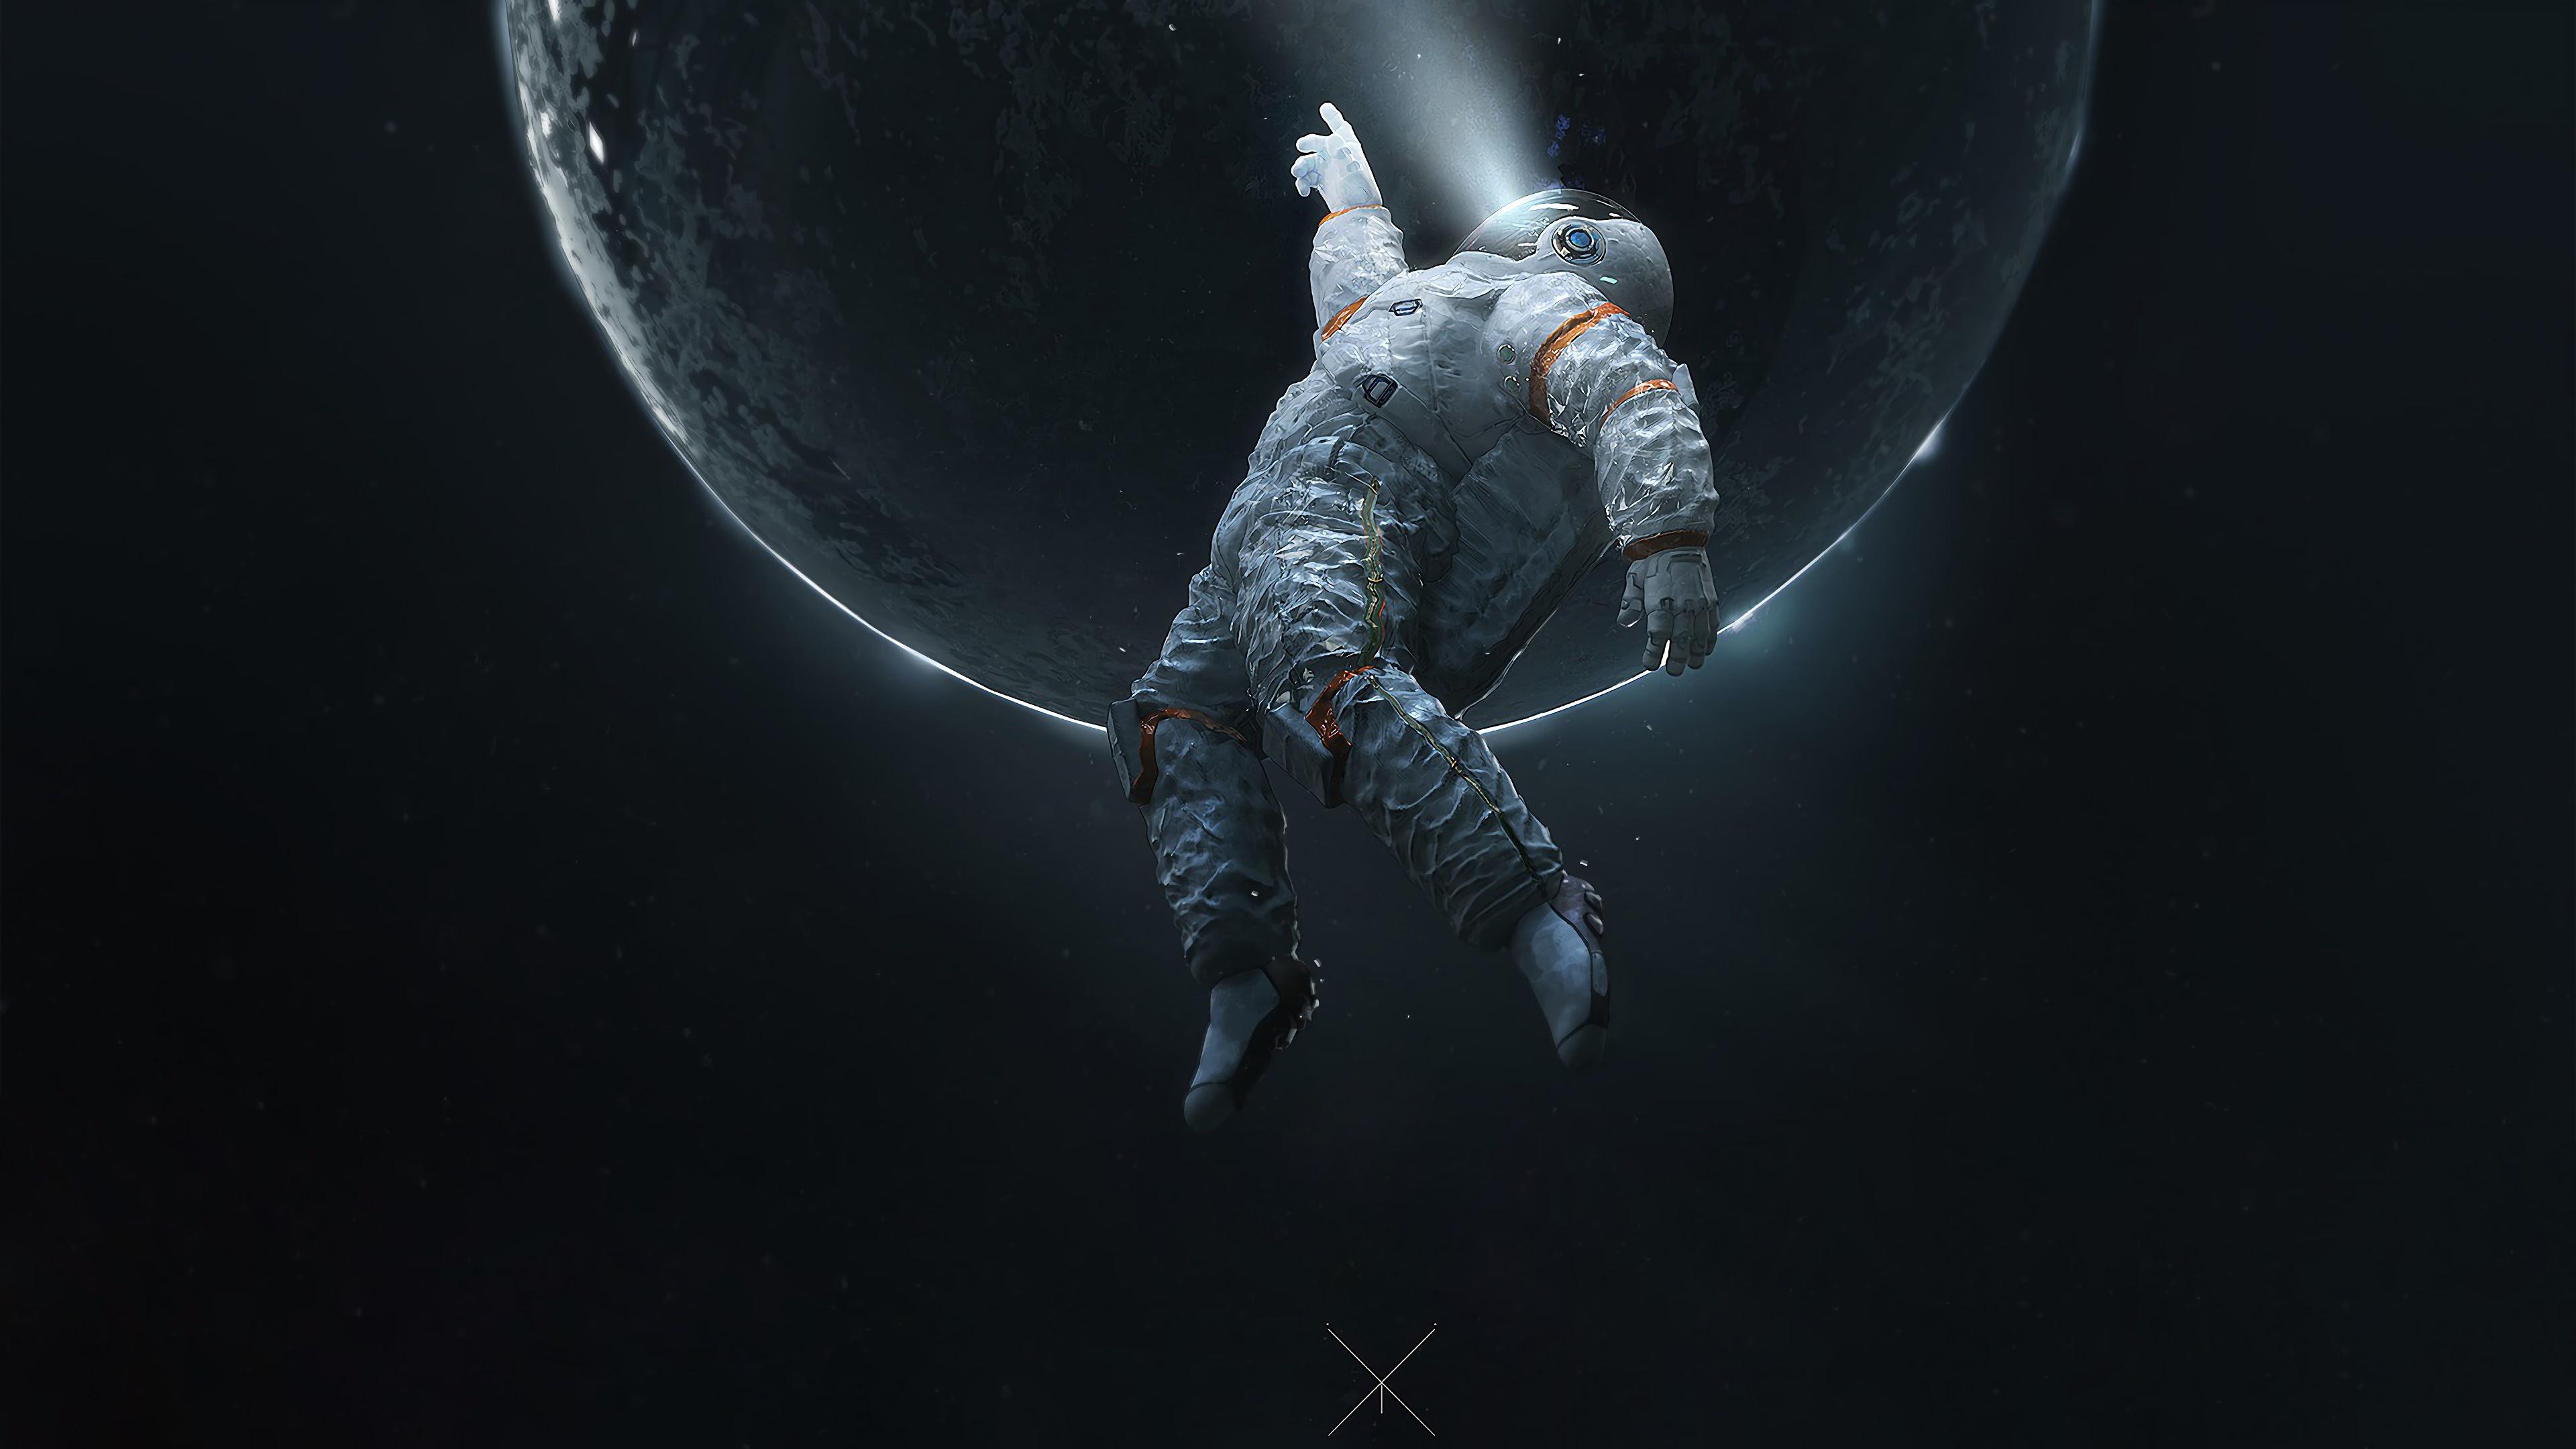 Astronaut In Space Wallpaper Hd